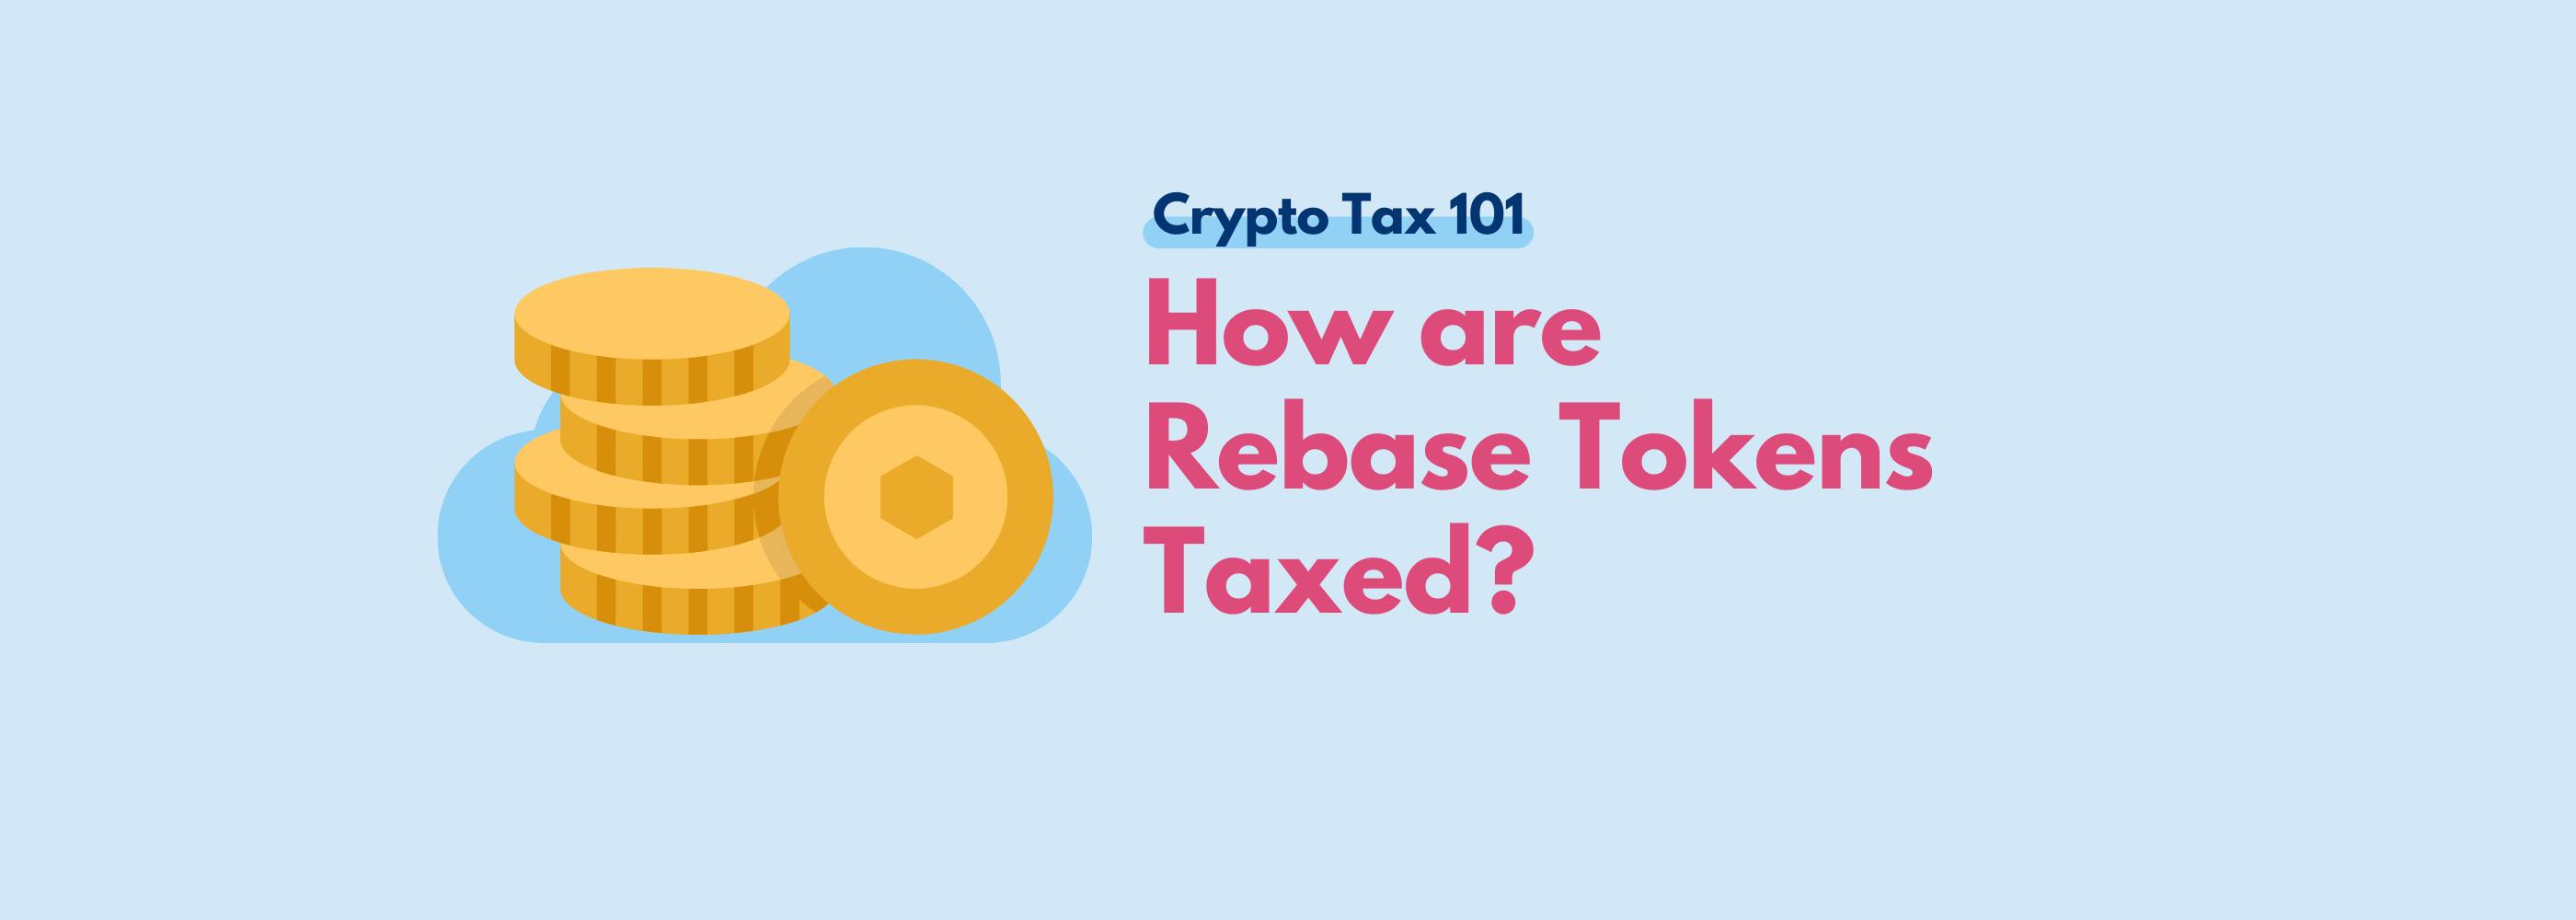 Rebase tokens tax